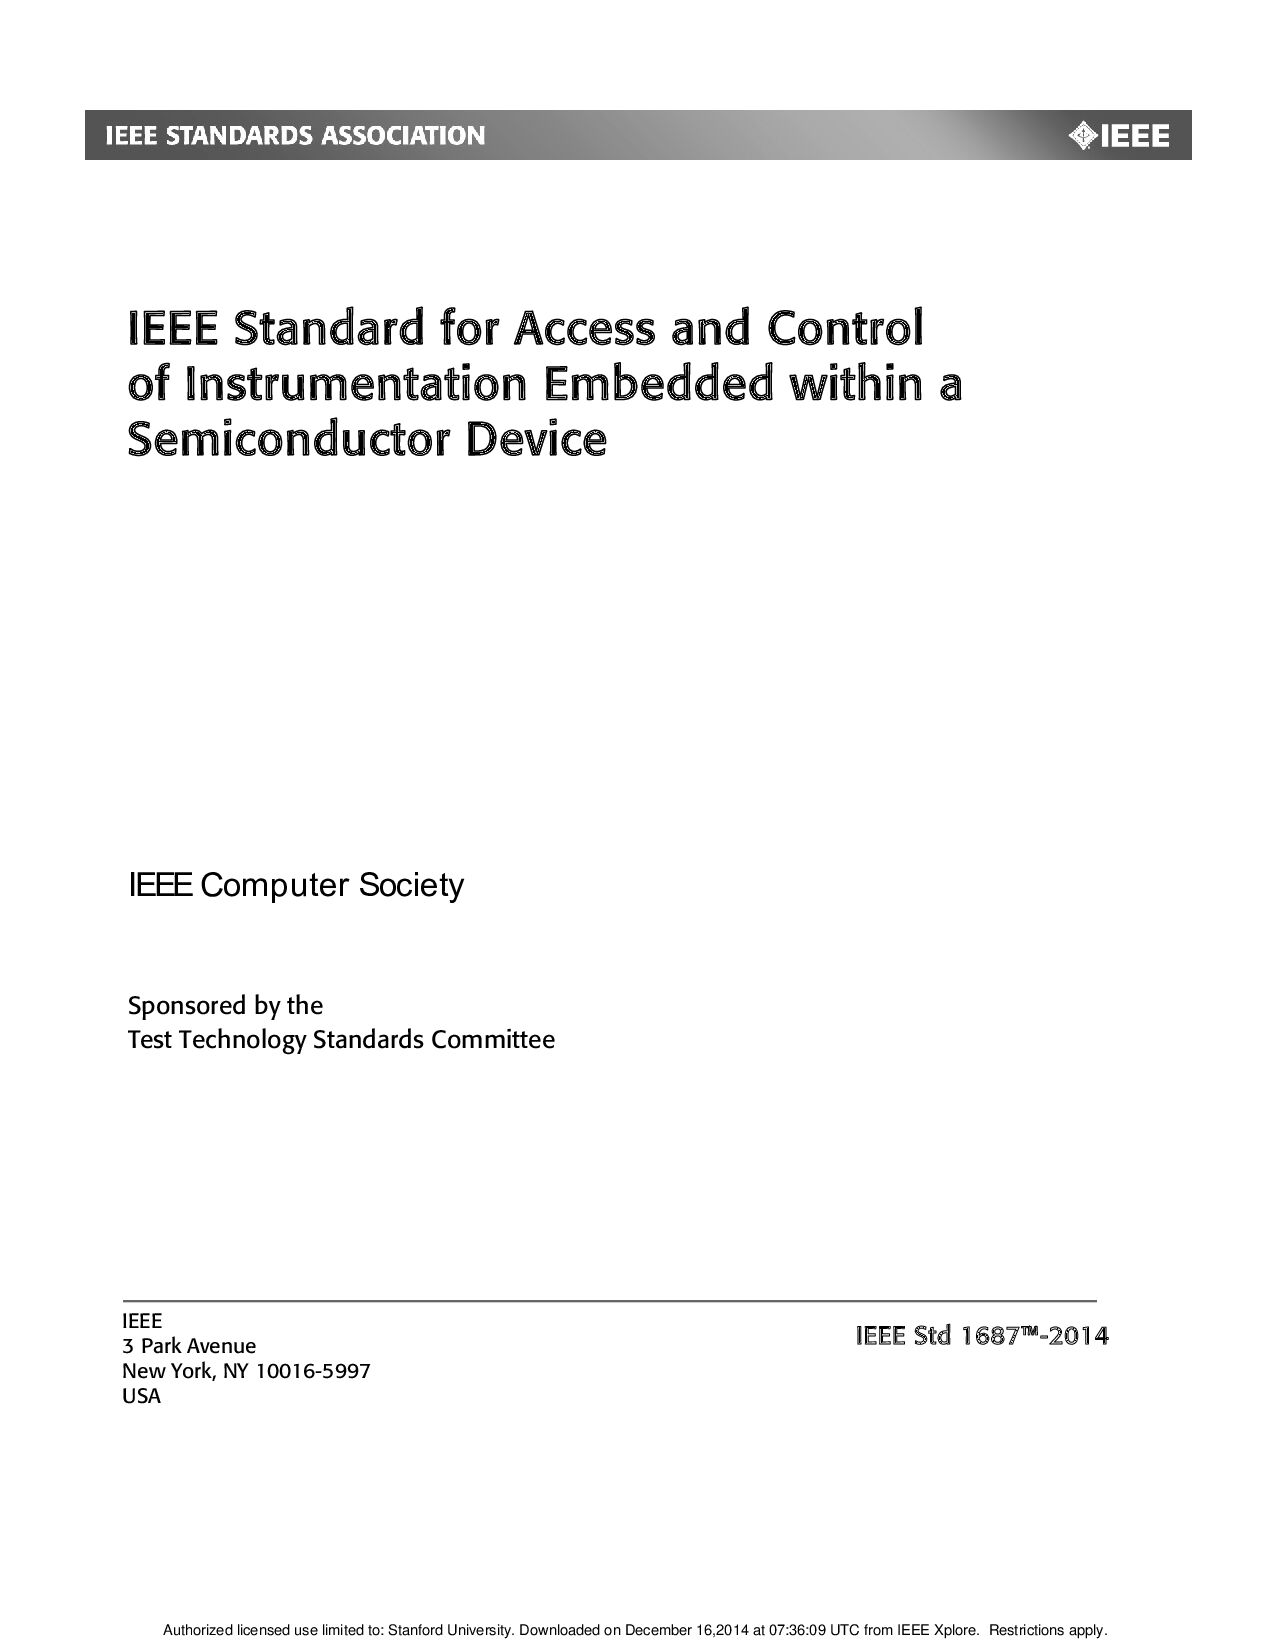 IEEE Std 1687-2014